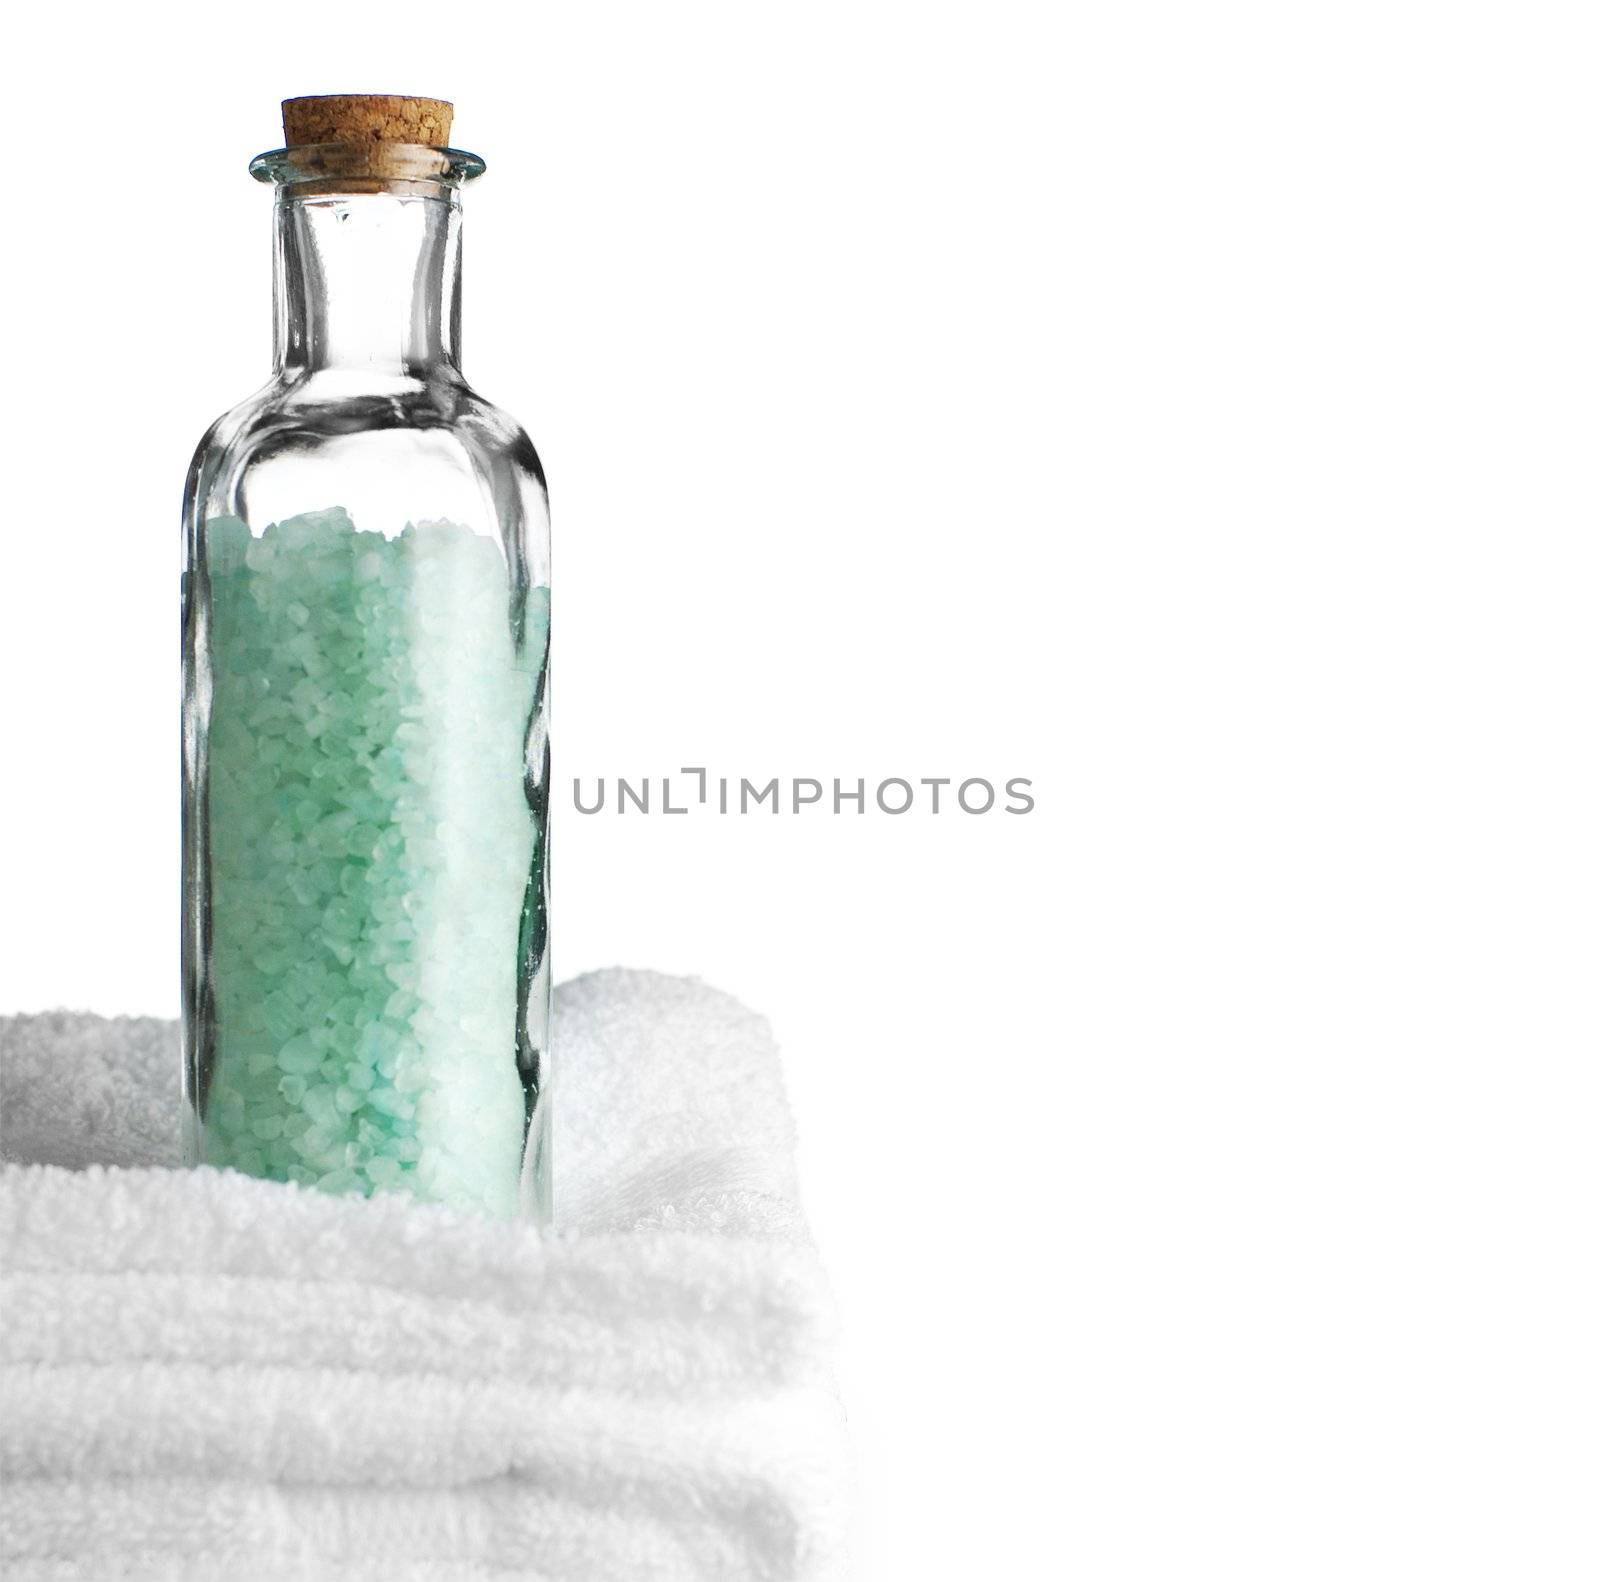 Bath towels and bath salt against a white background.